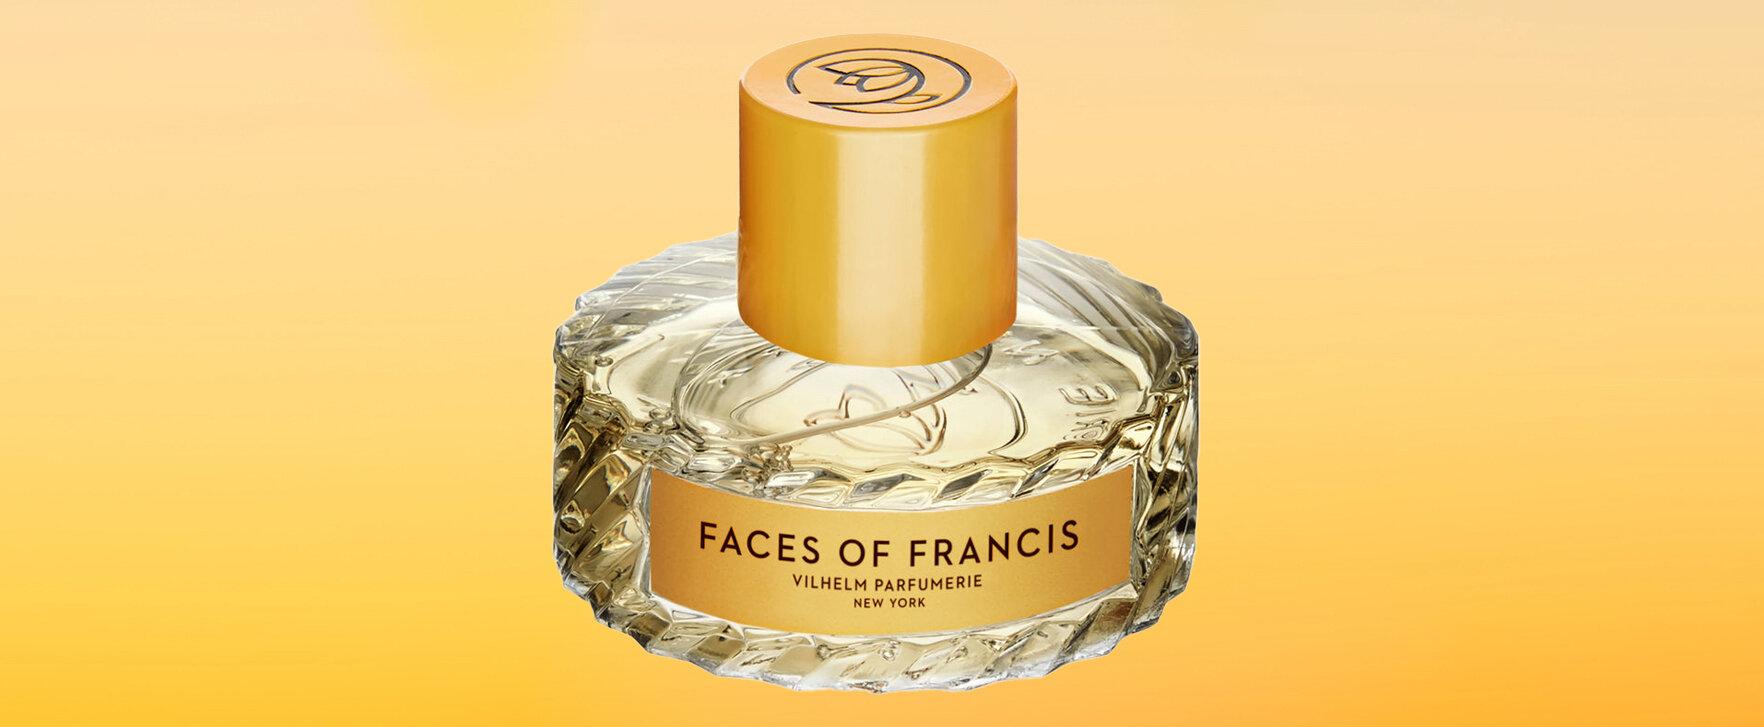 A Fragrance Journey Through Art: Vilhelm Parfumerie Presents "Faces of Francis"